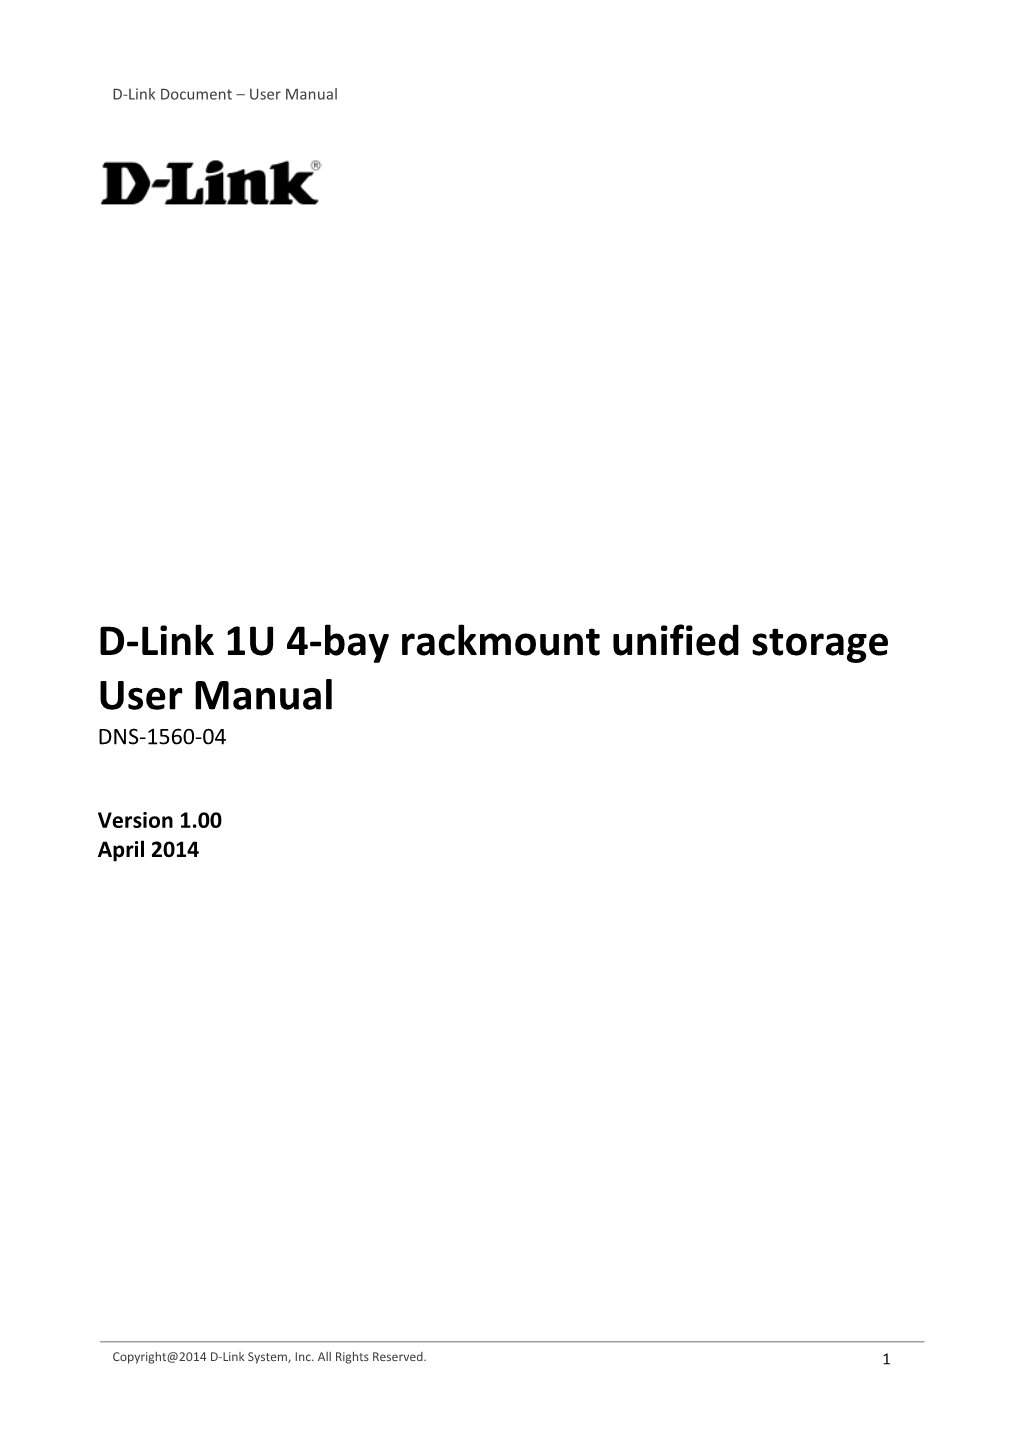 D-Link 1U 4-Bay Rackmount Unified Storage User Manual DNS-1560-04